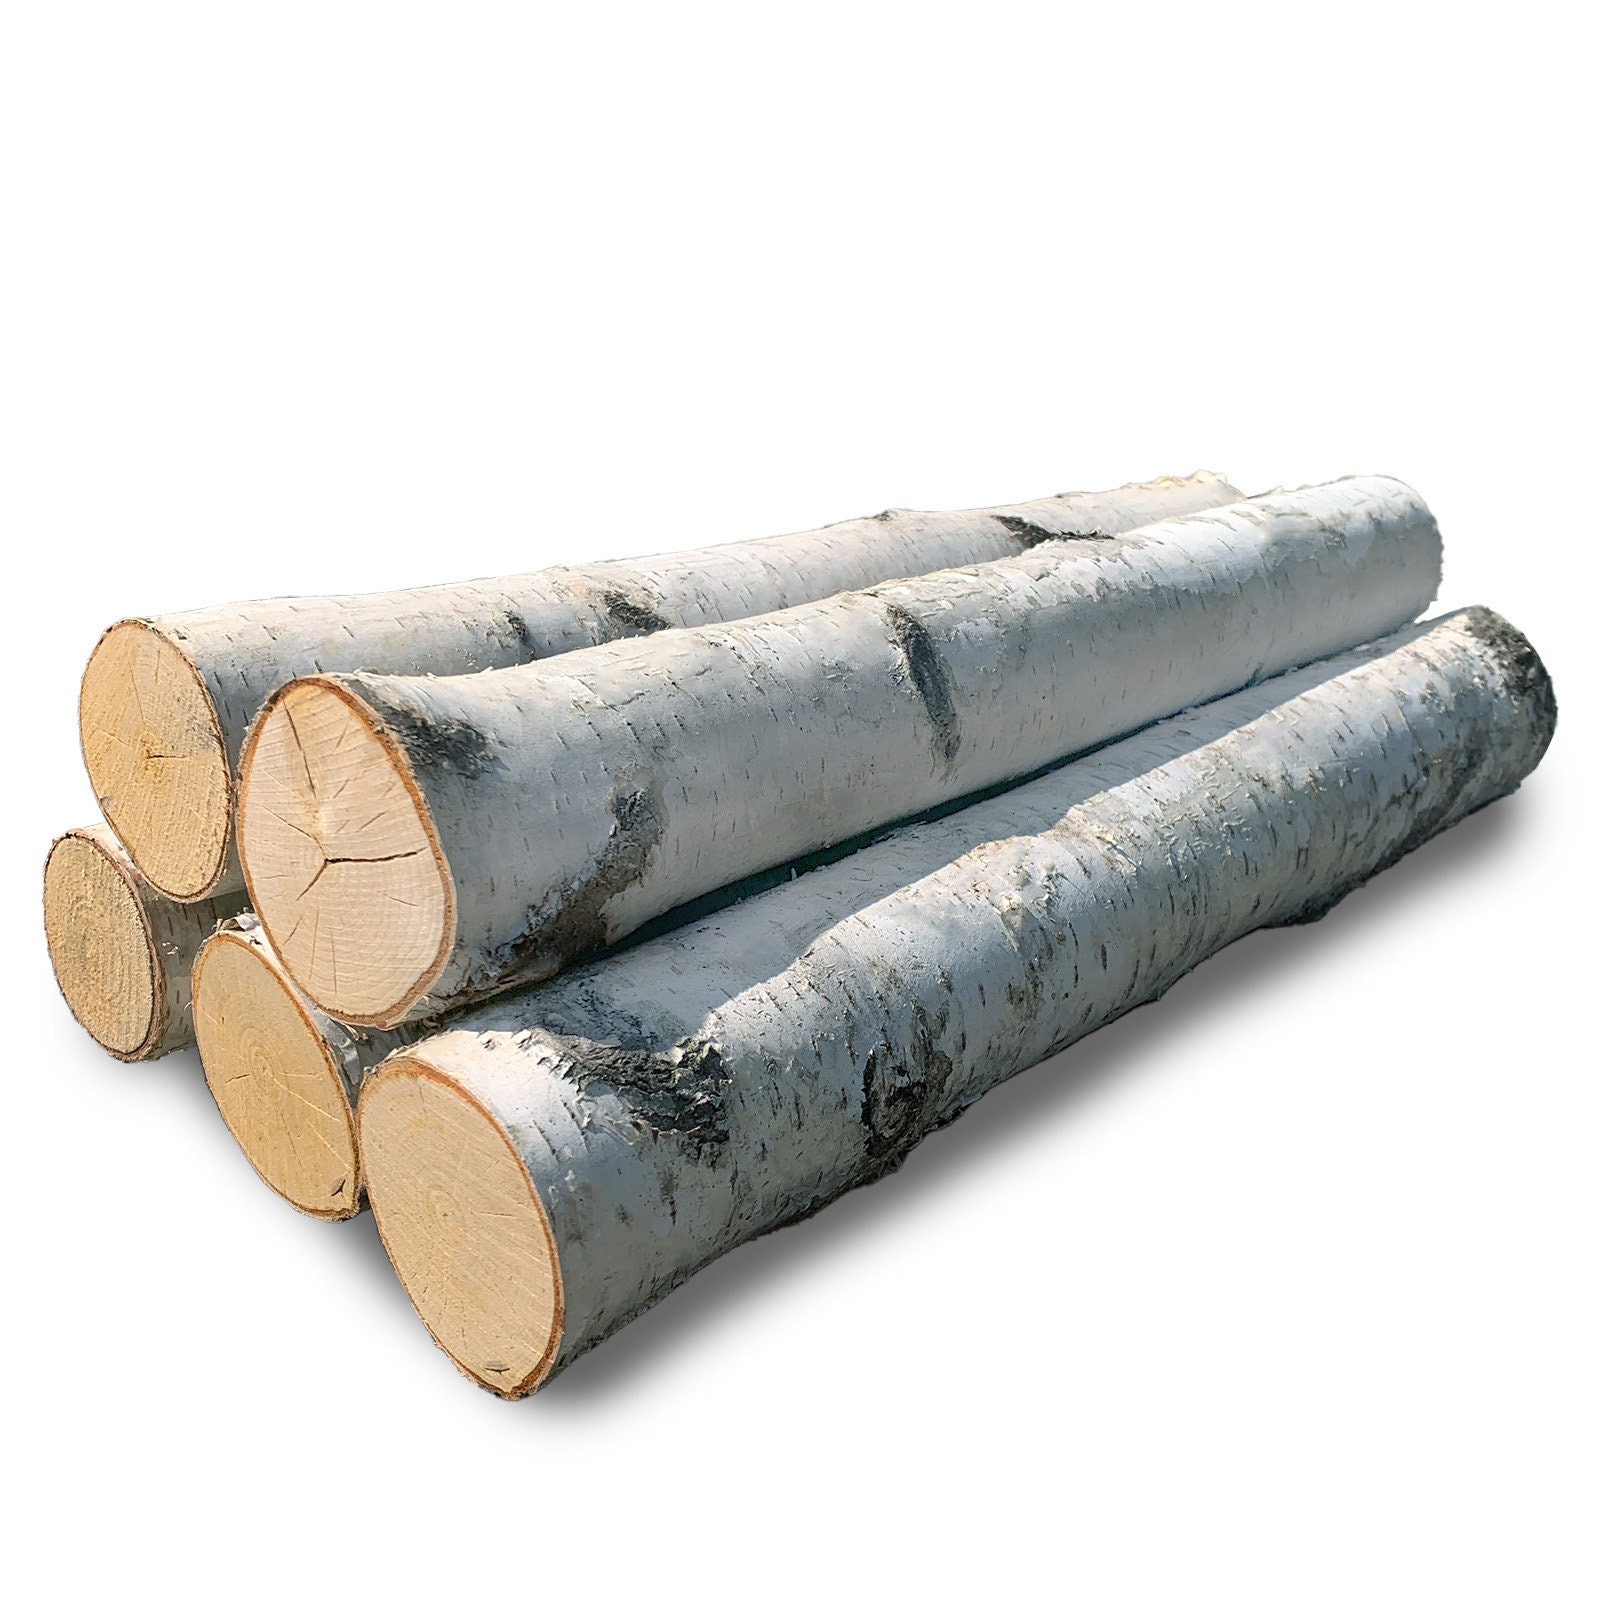 White Birch Fireplace Logs Cottagecore Decor Birch Logs Set of 5 